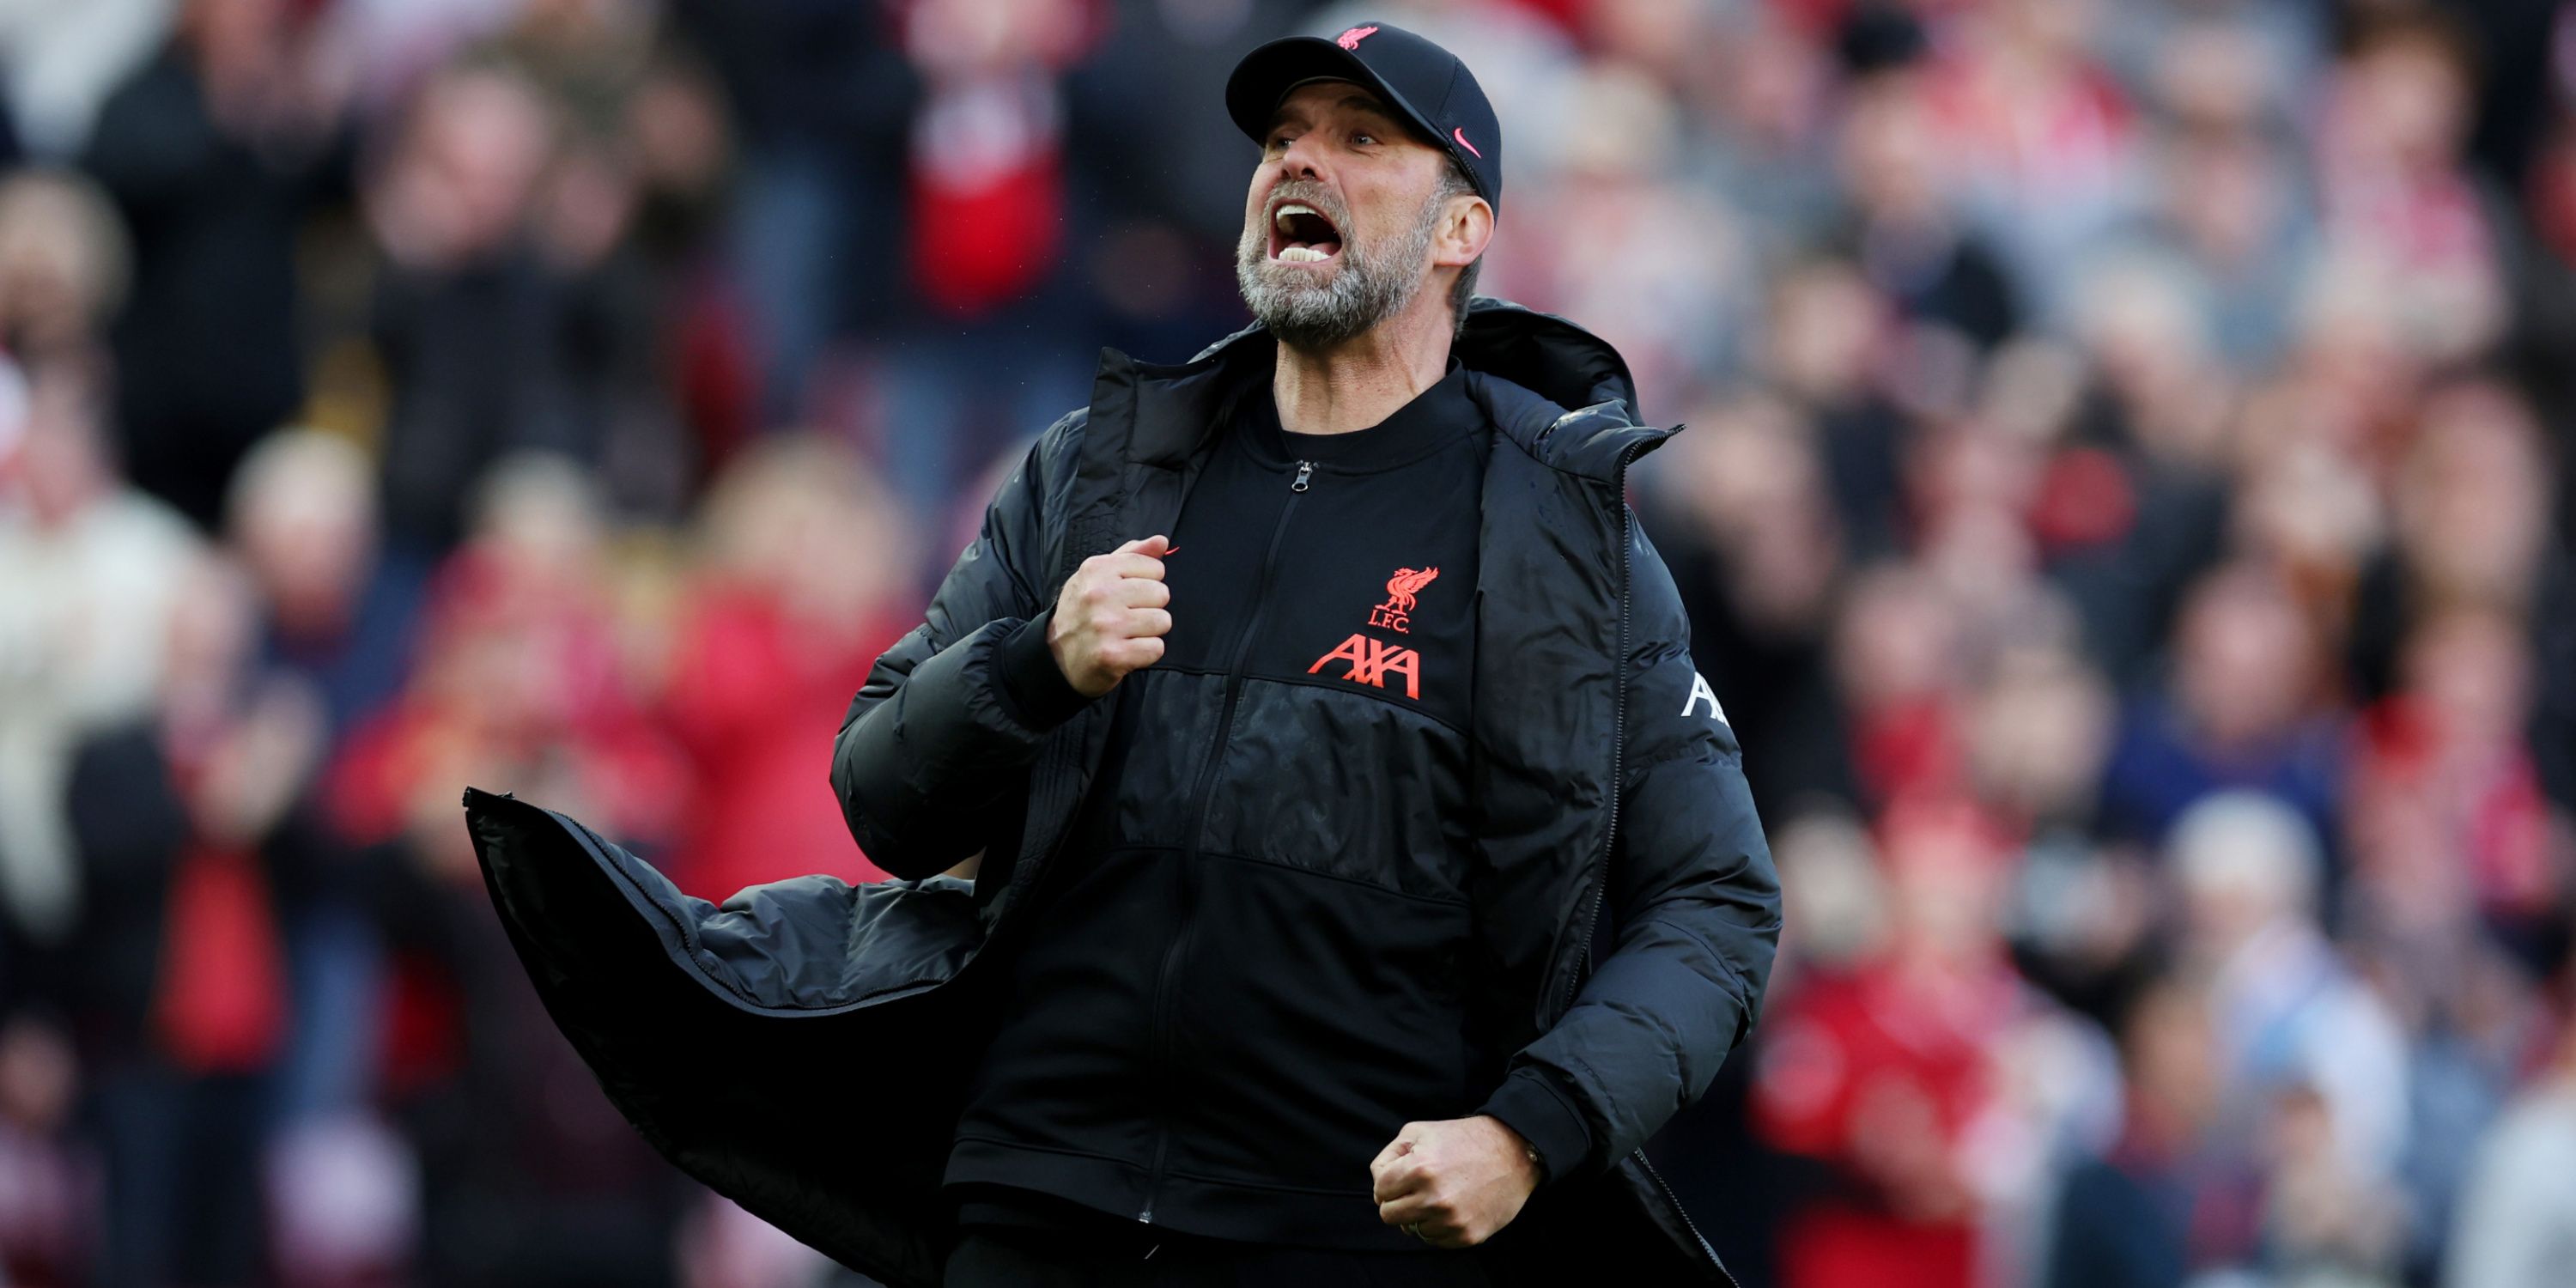 Liverpool manager Jurgen Klopp celebrating passionately